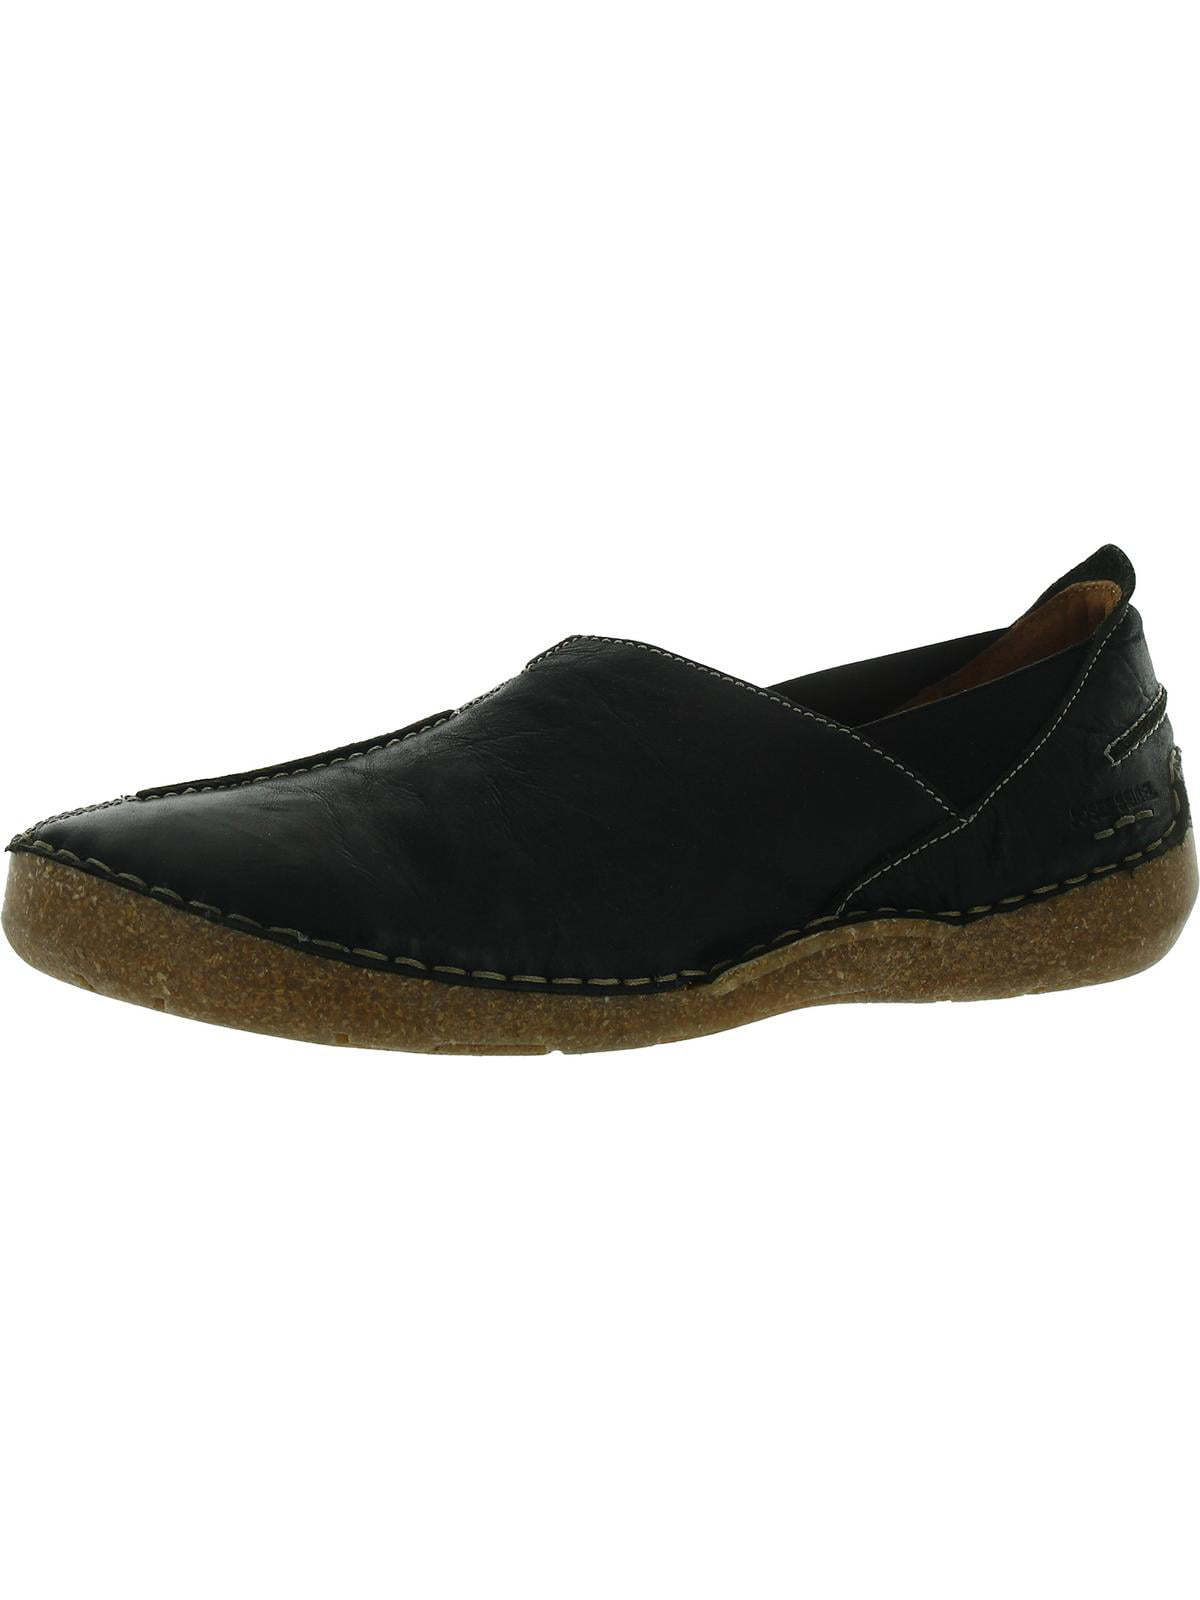 Josef Seibel Mens Leather Slip On Loafers - Walmart.com